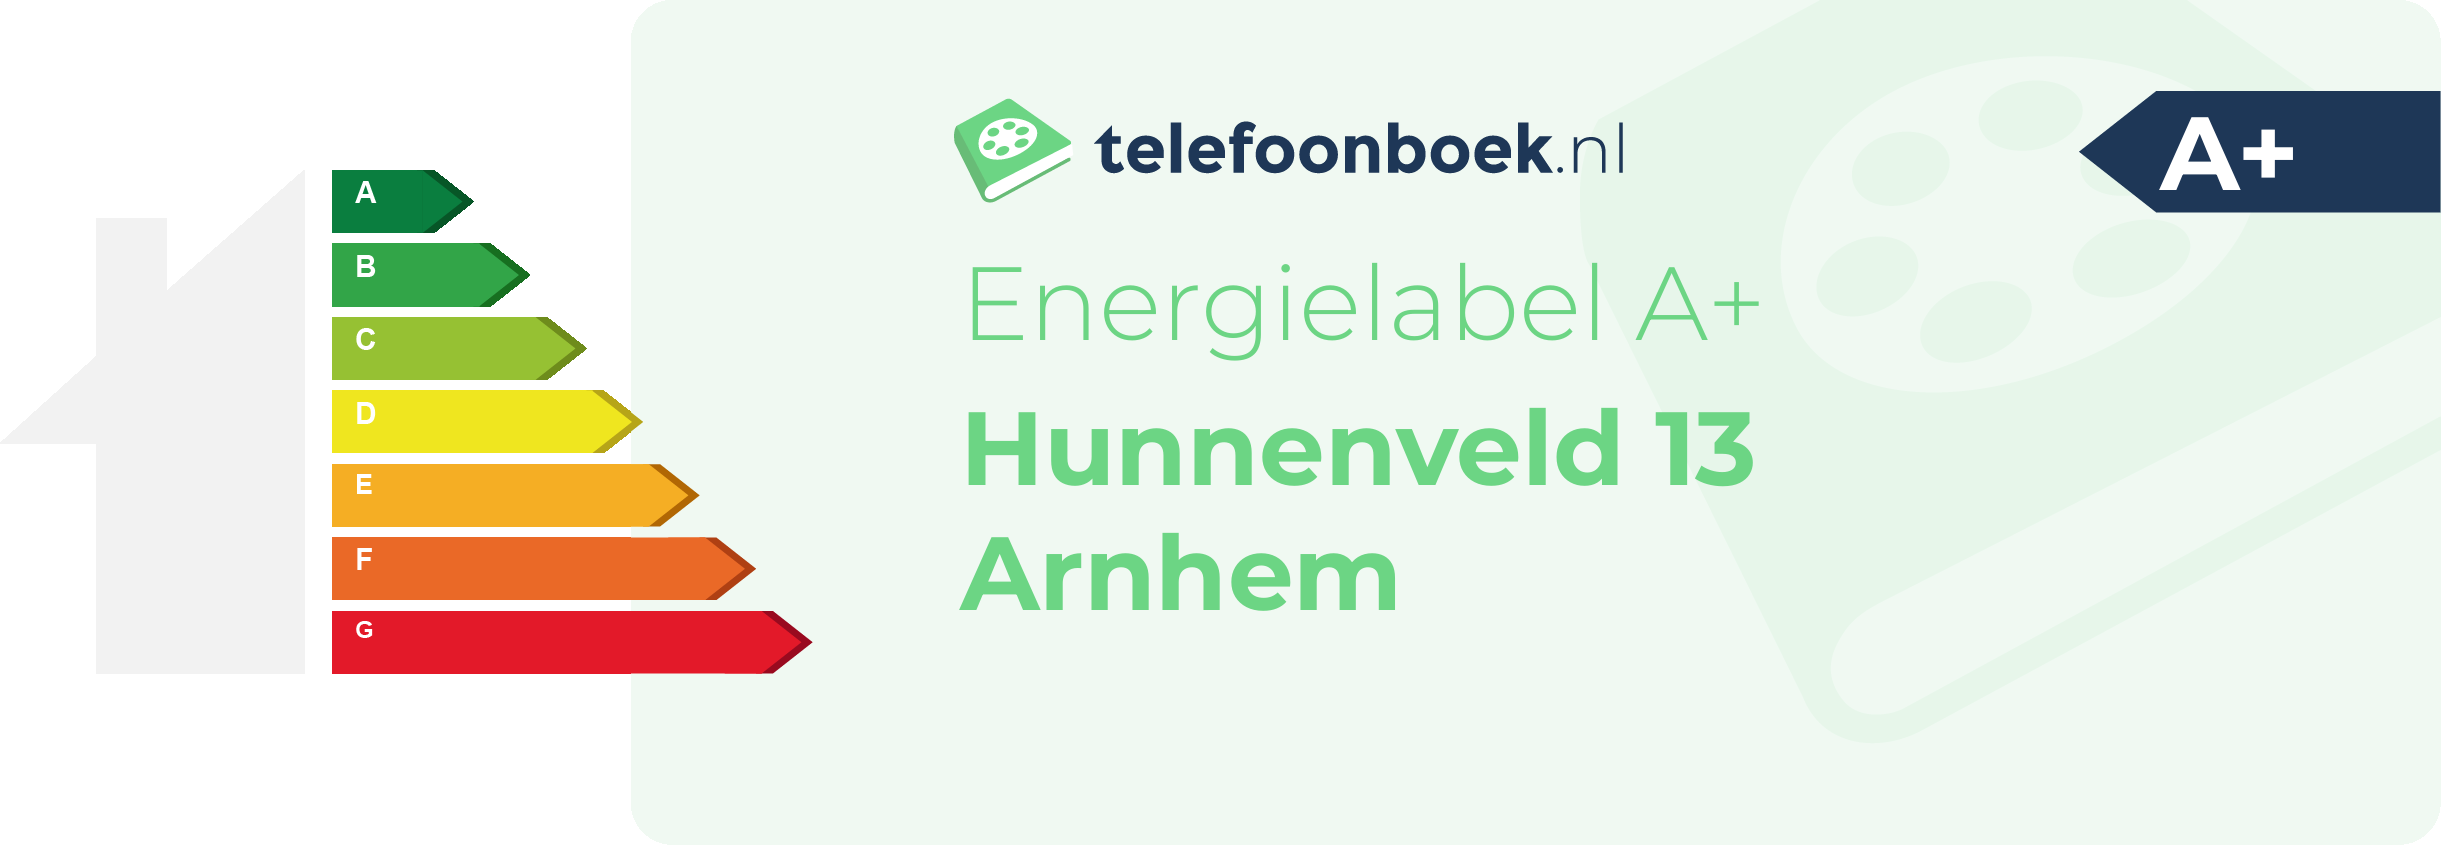 Energielabel Hunnenveld 13 Arnhem